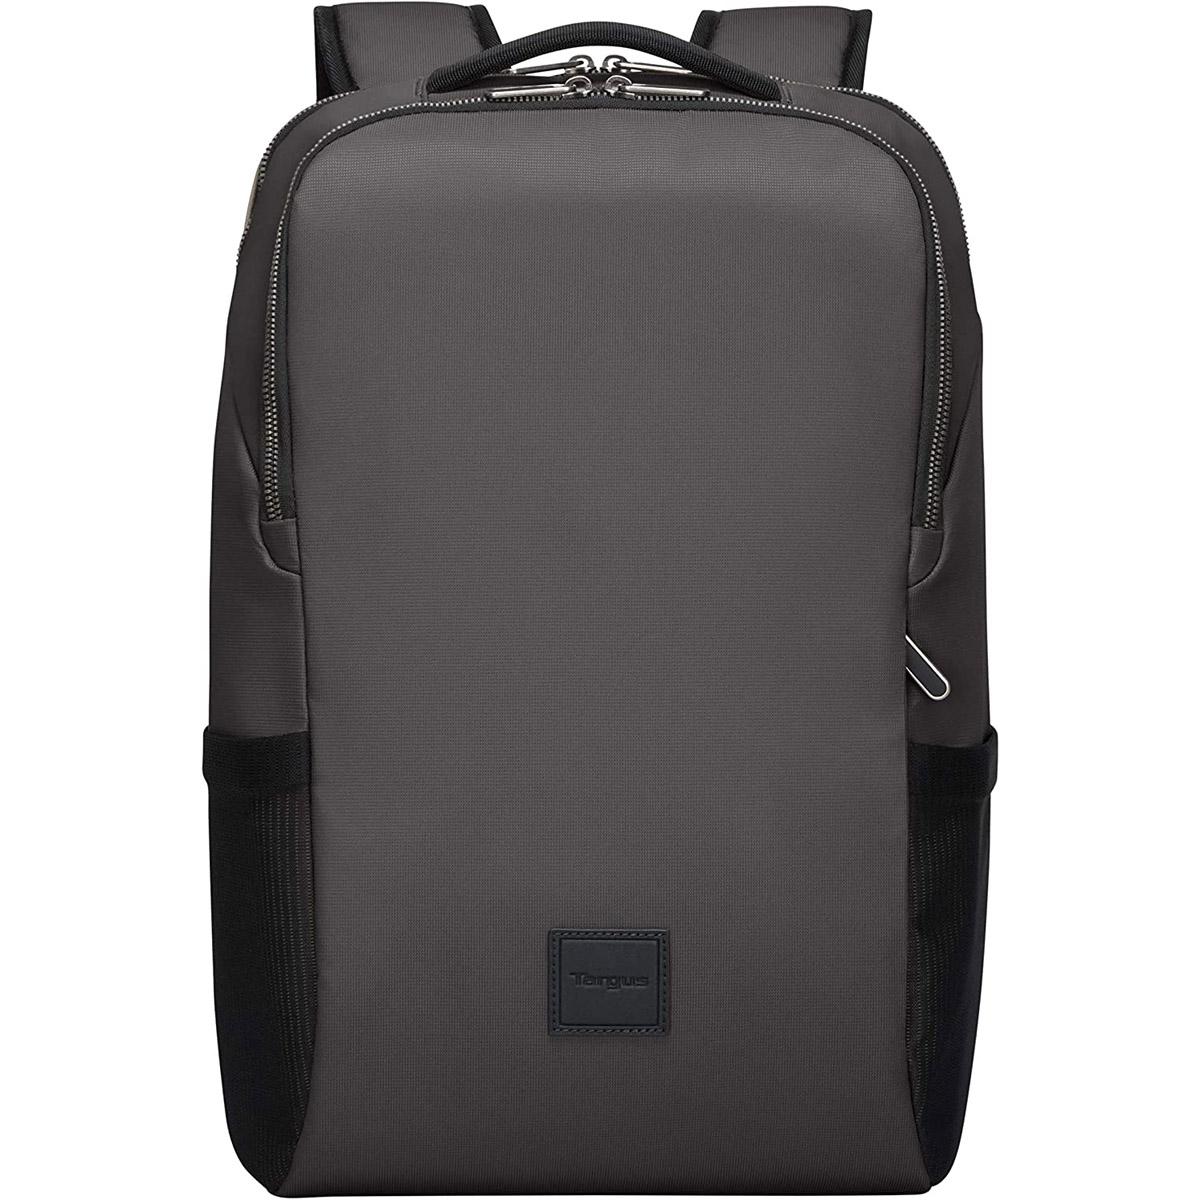 Targus 15.6in Urban Essential Backpack for $21.66